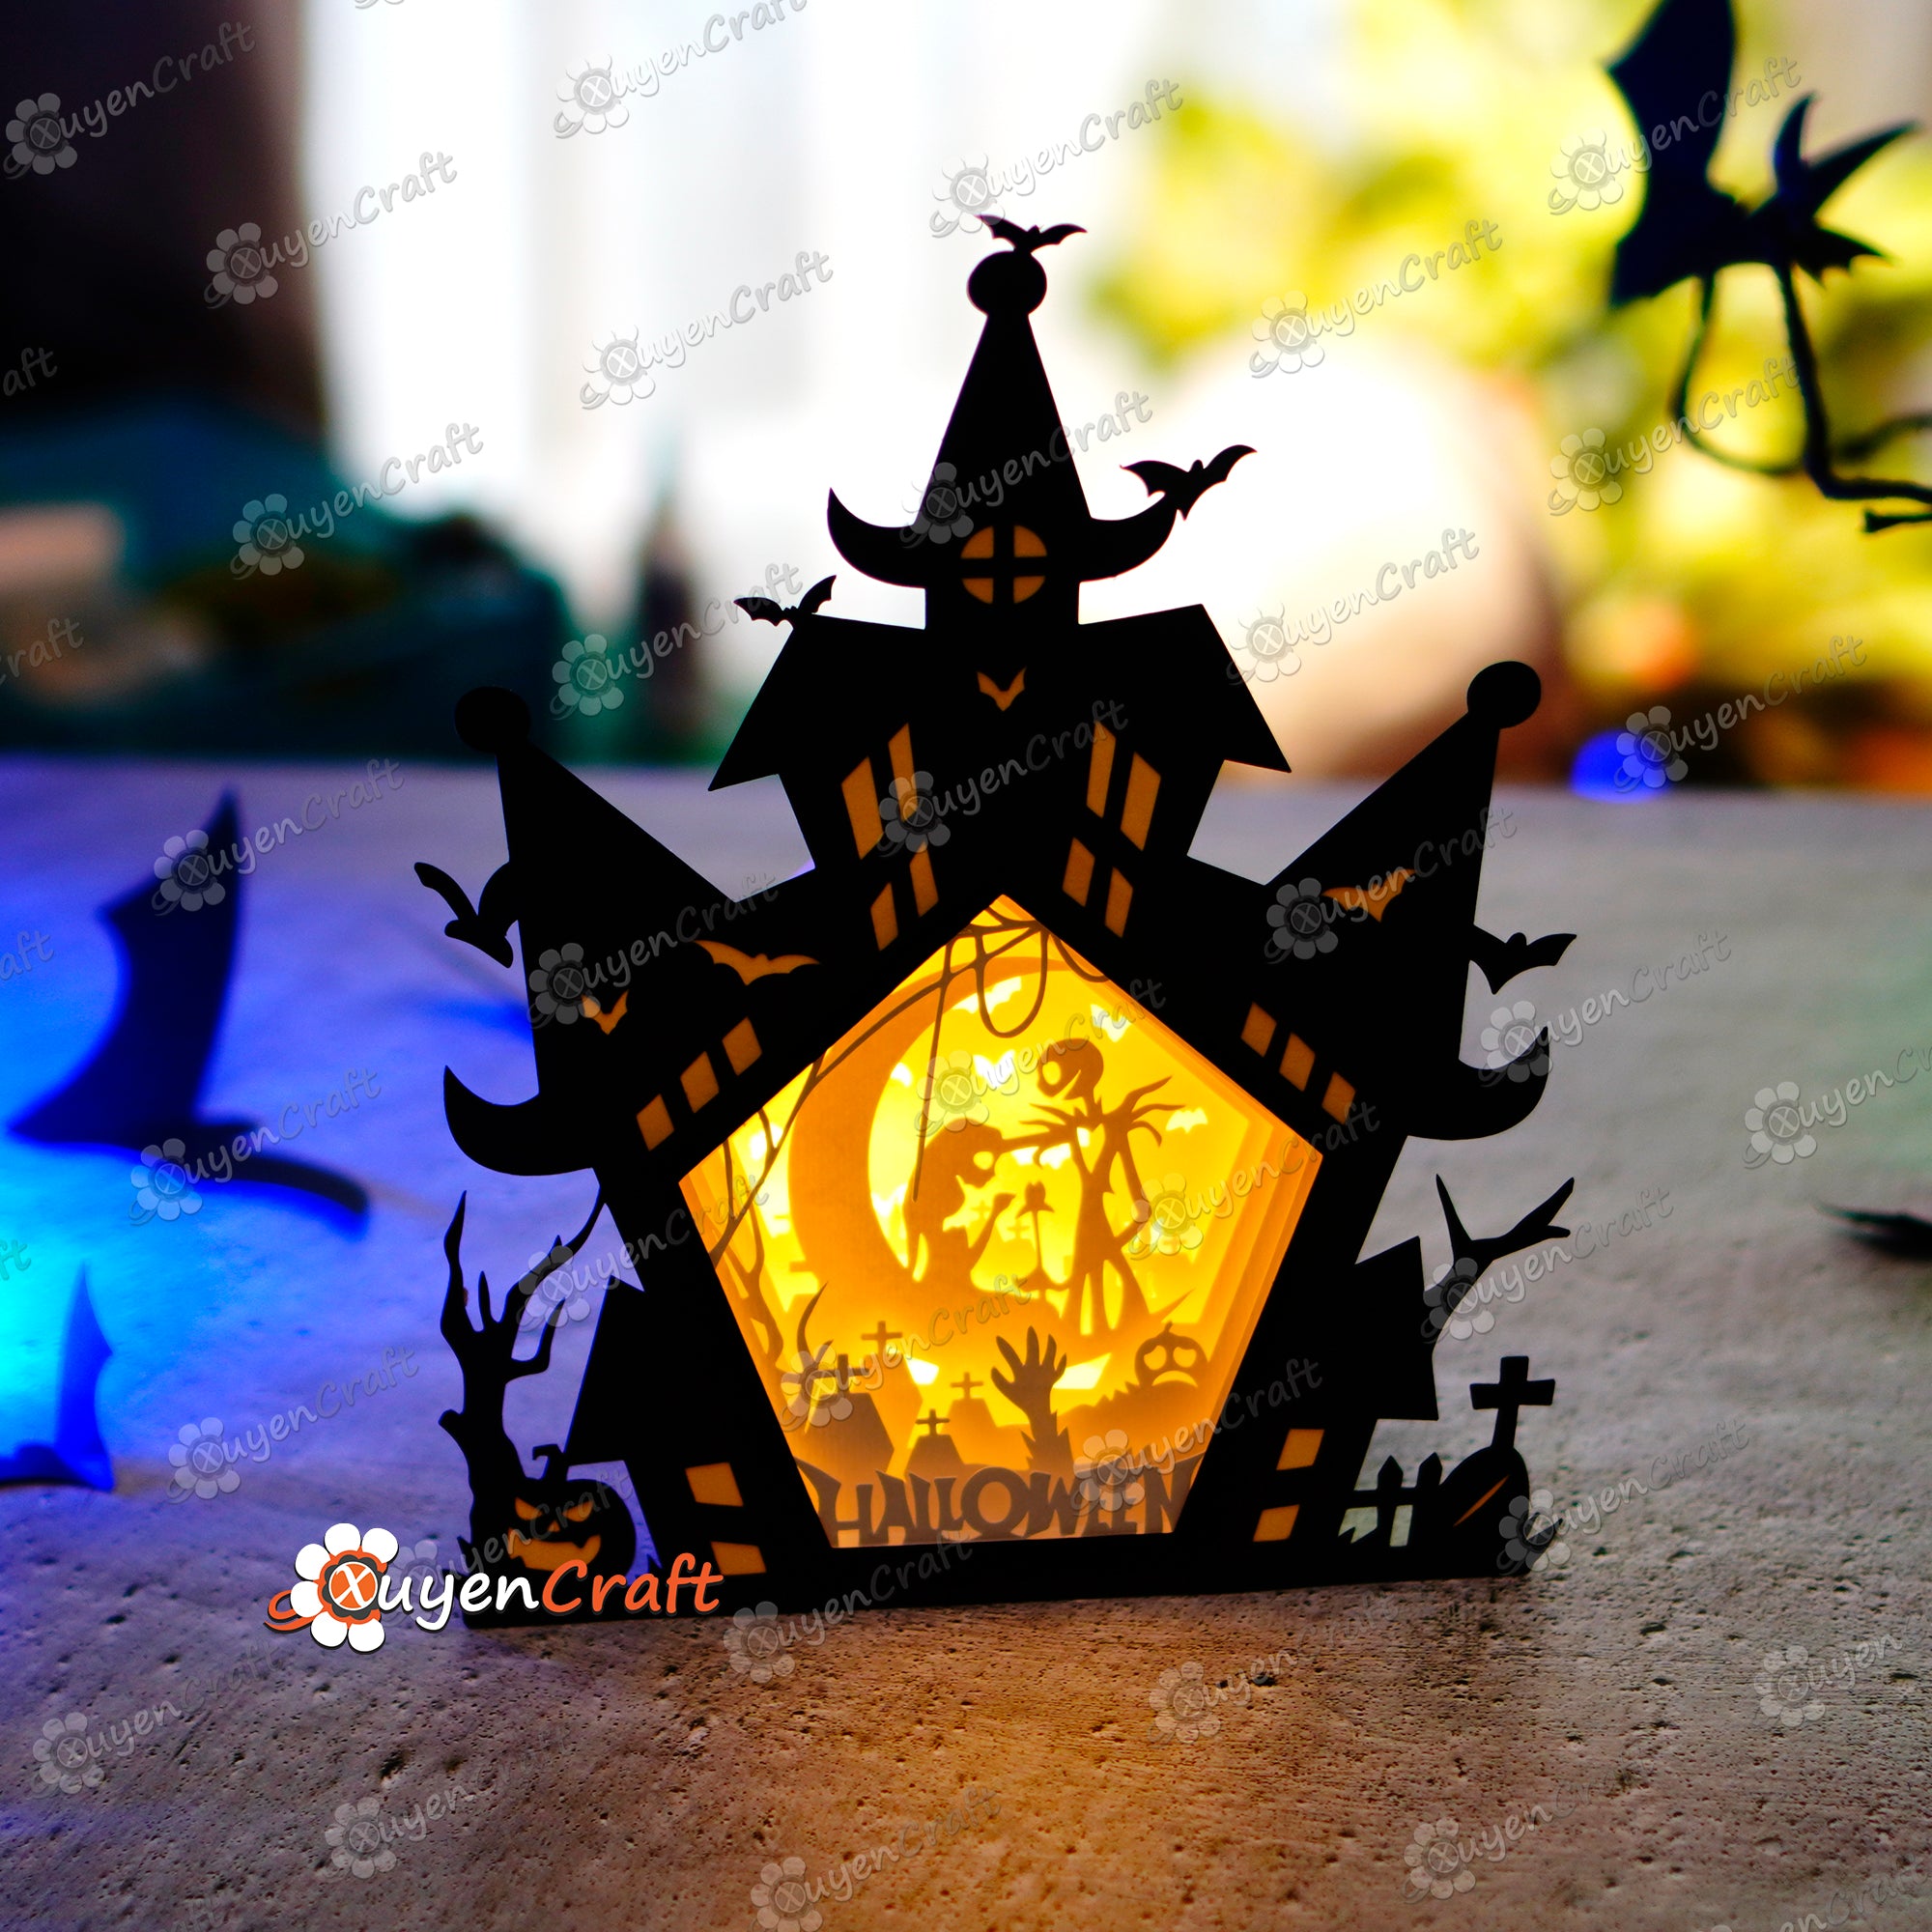 Nightmare Before Christmas Shadow Box SVG, Halloween Paper Cut Template,  Light box SVG Files 8x8 in - Bích Artist